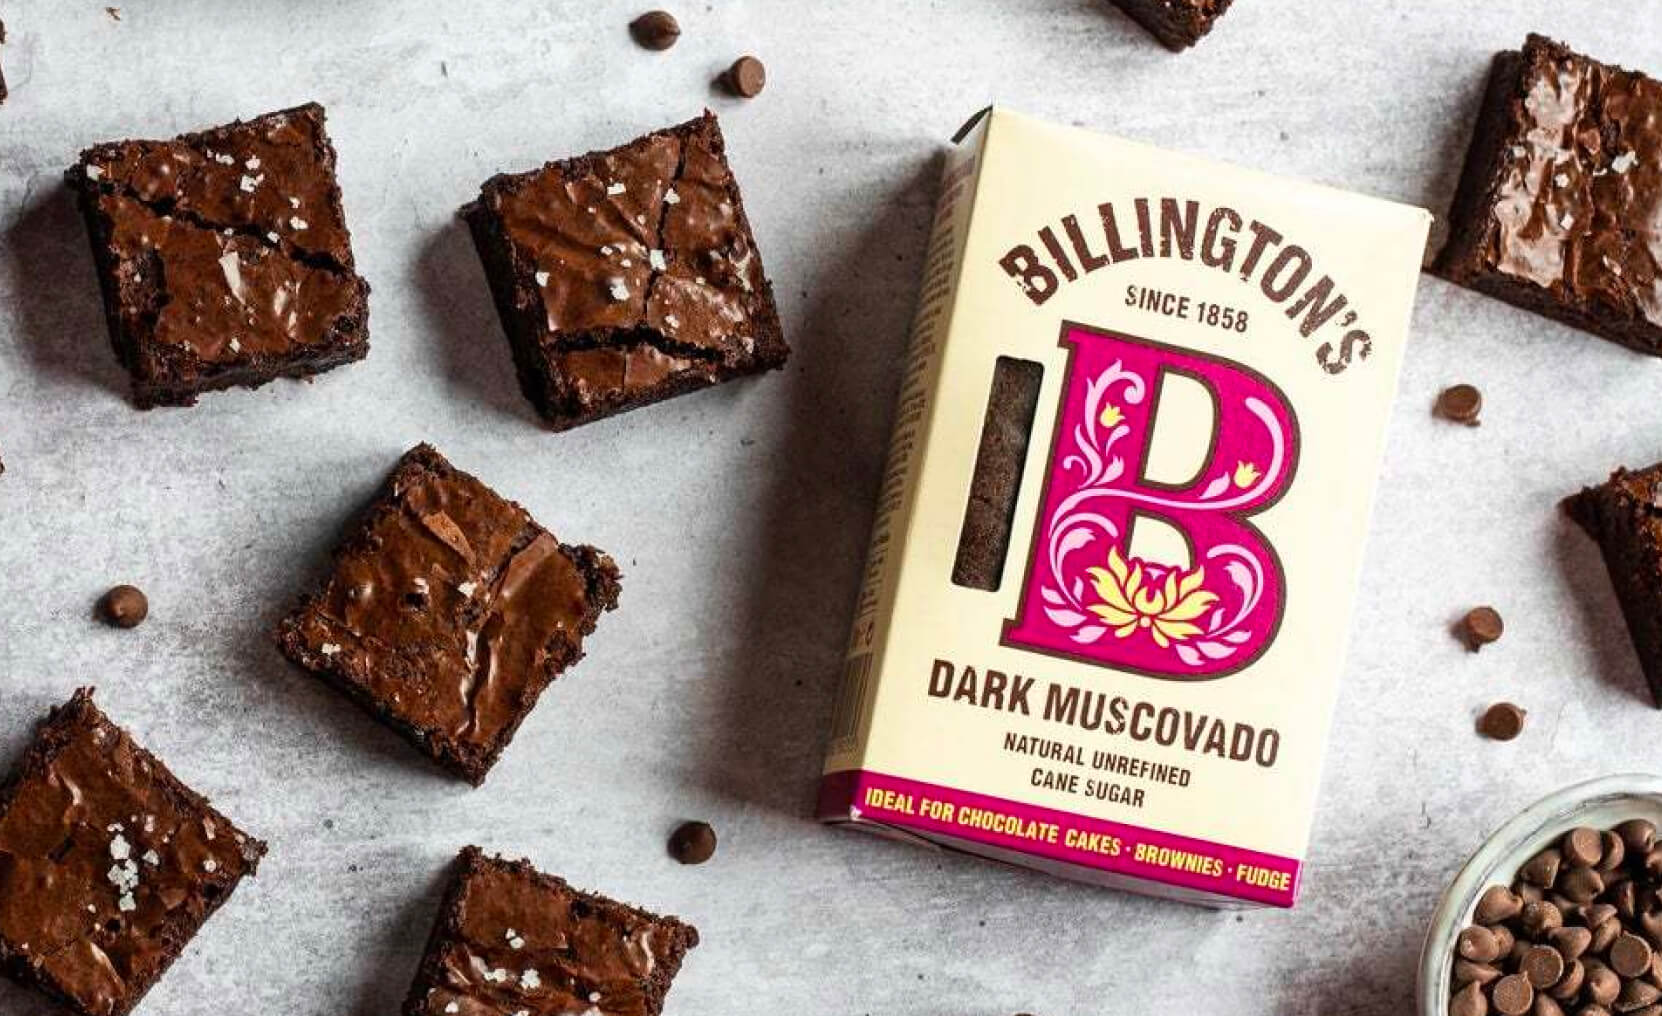 Chocolate brownies arranged around a packet of Billington's Dark Muscovado Sugar.